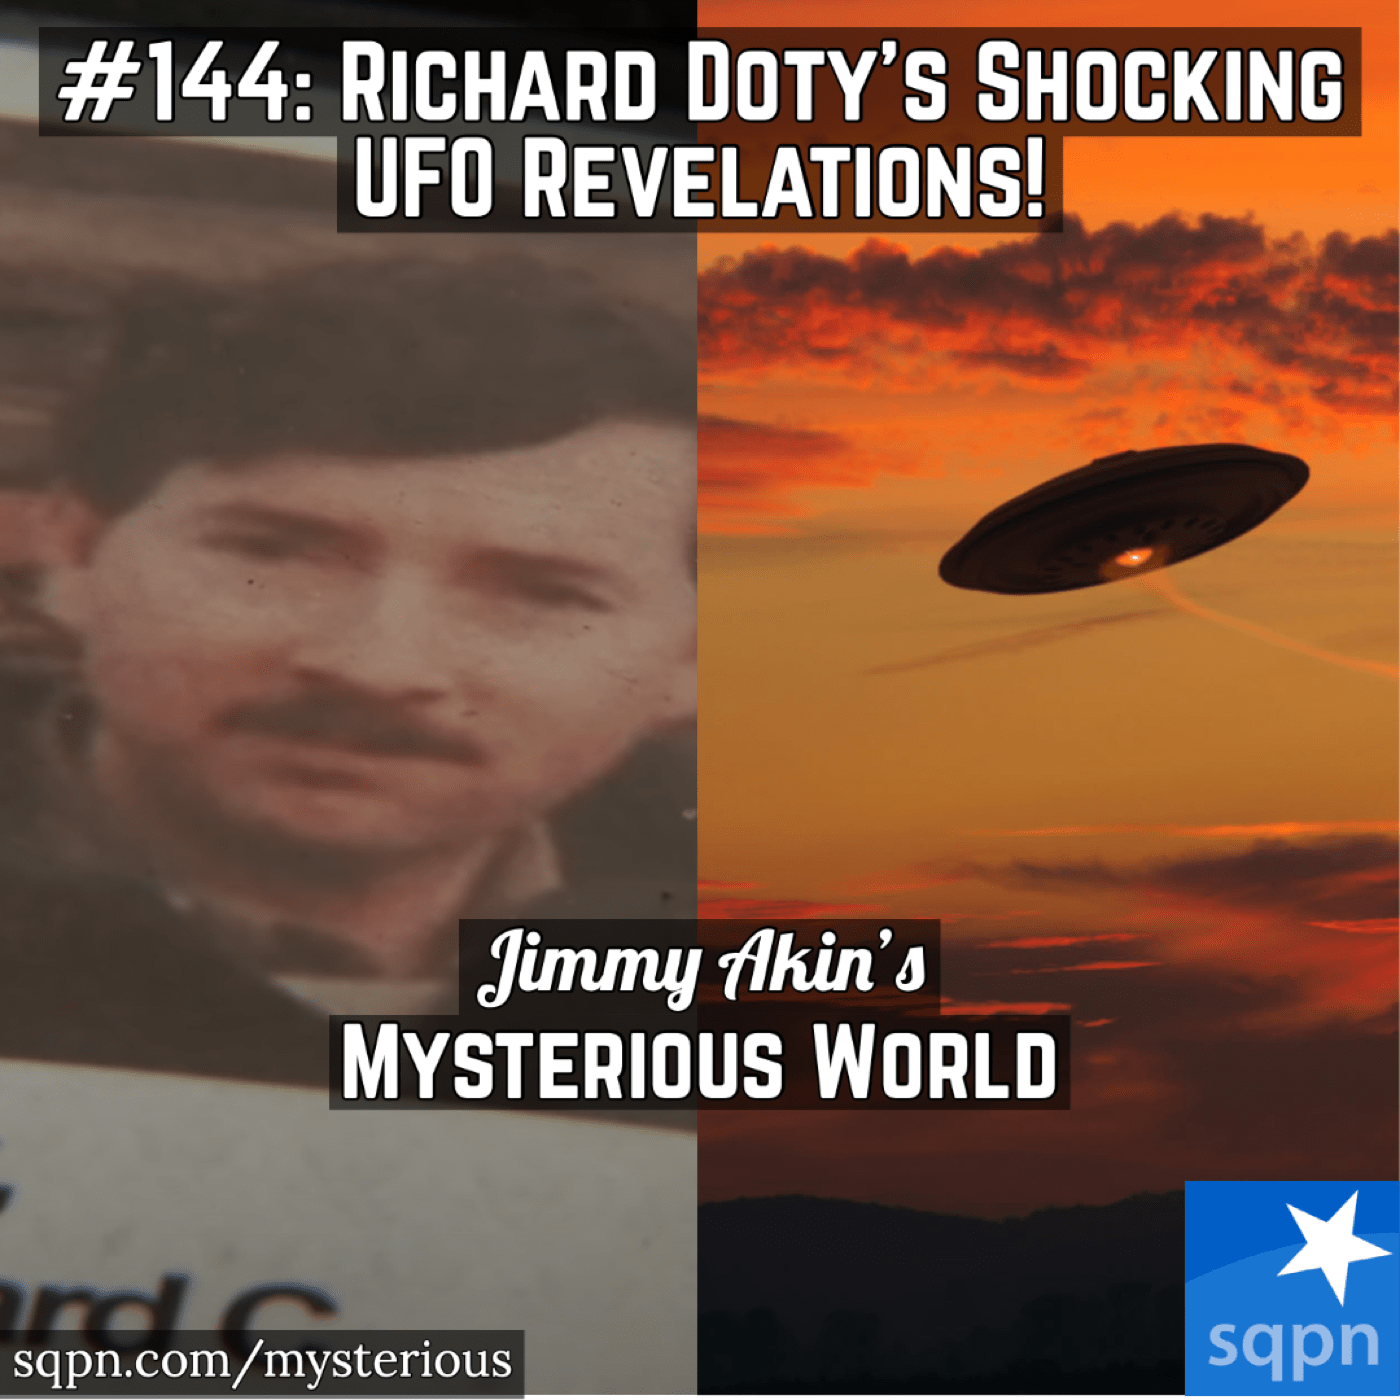 Richard Doty’s Shocking UFO Revelations! (Paul Bennewitz, Dulce Base, Project Beta)